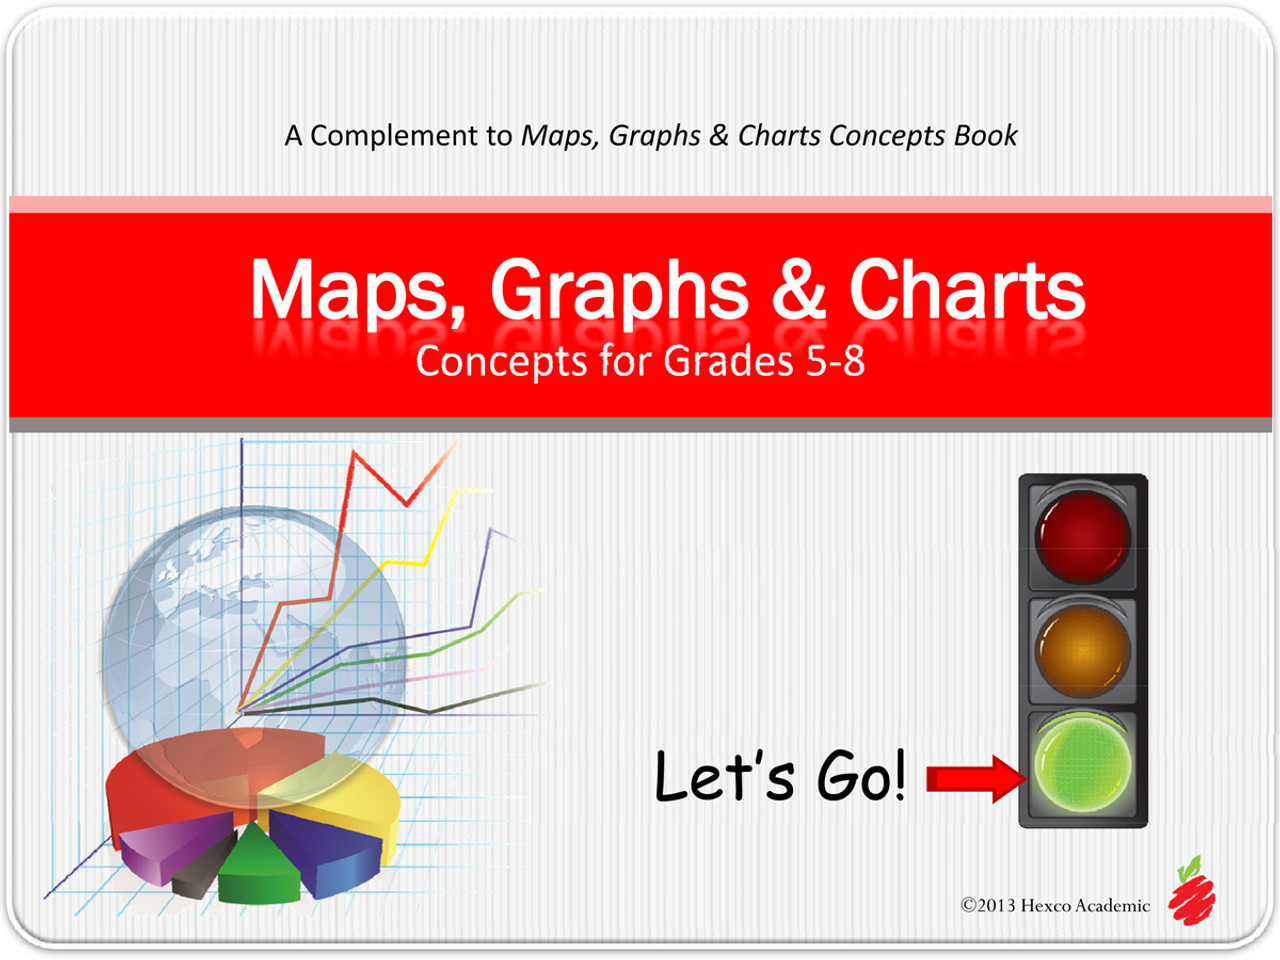 Charts Maps Graphs